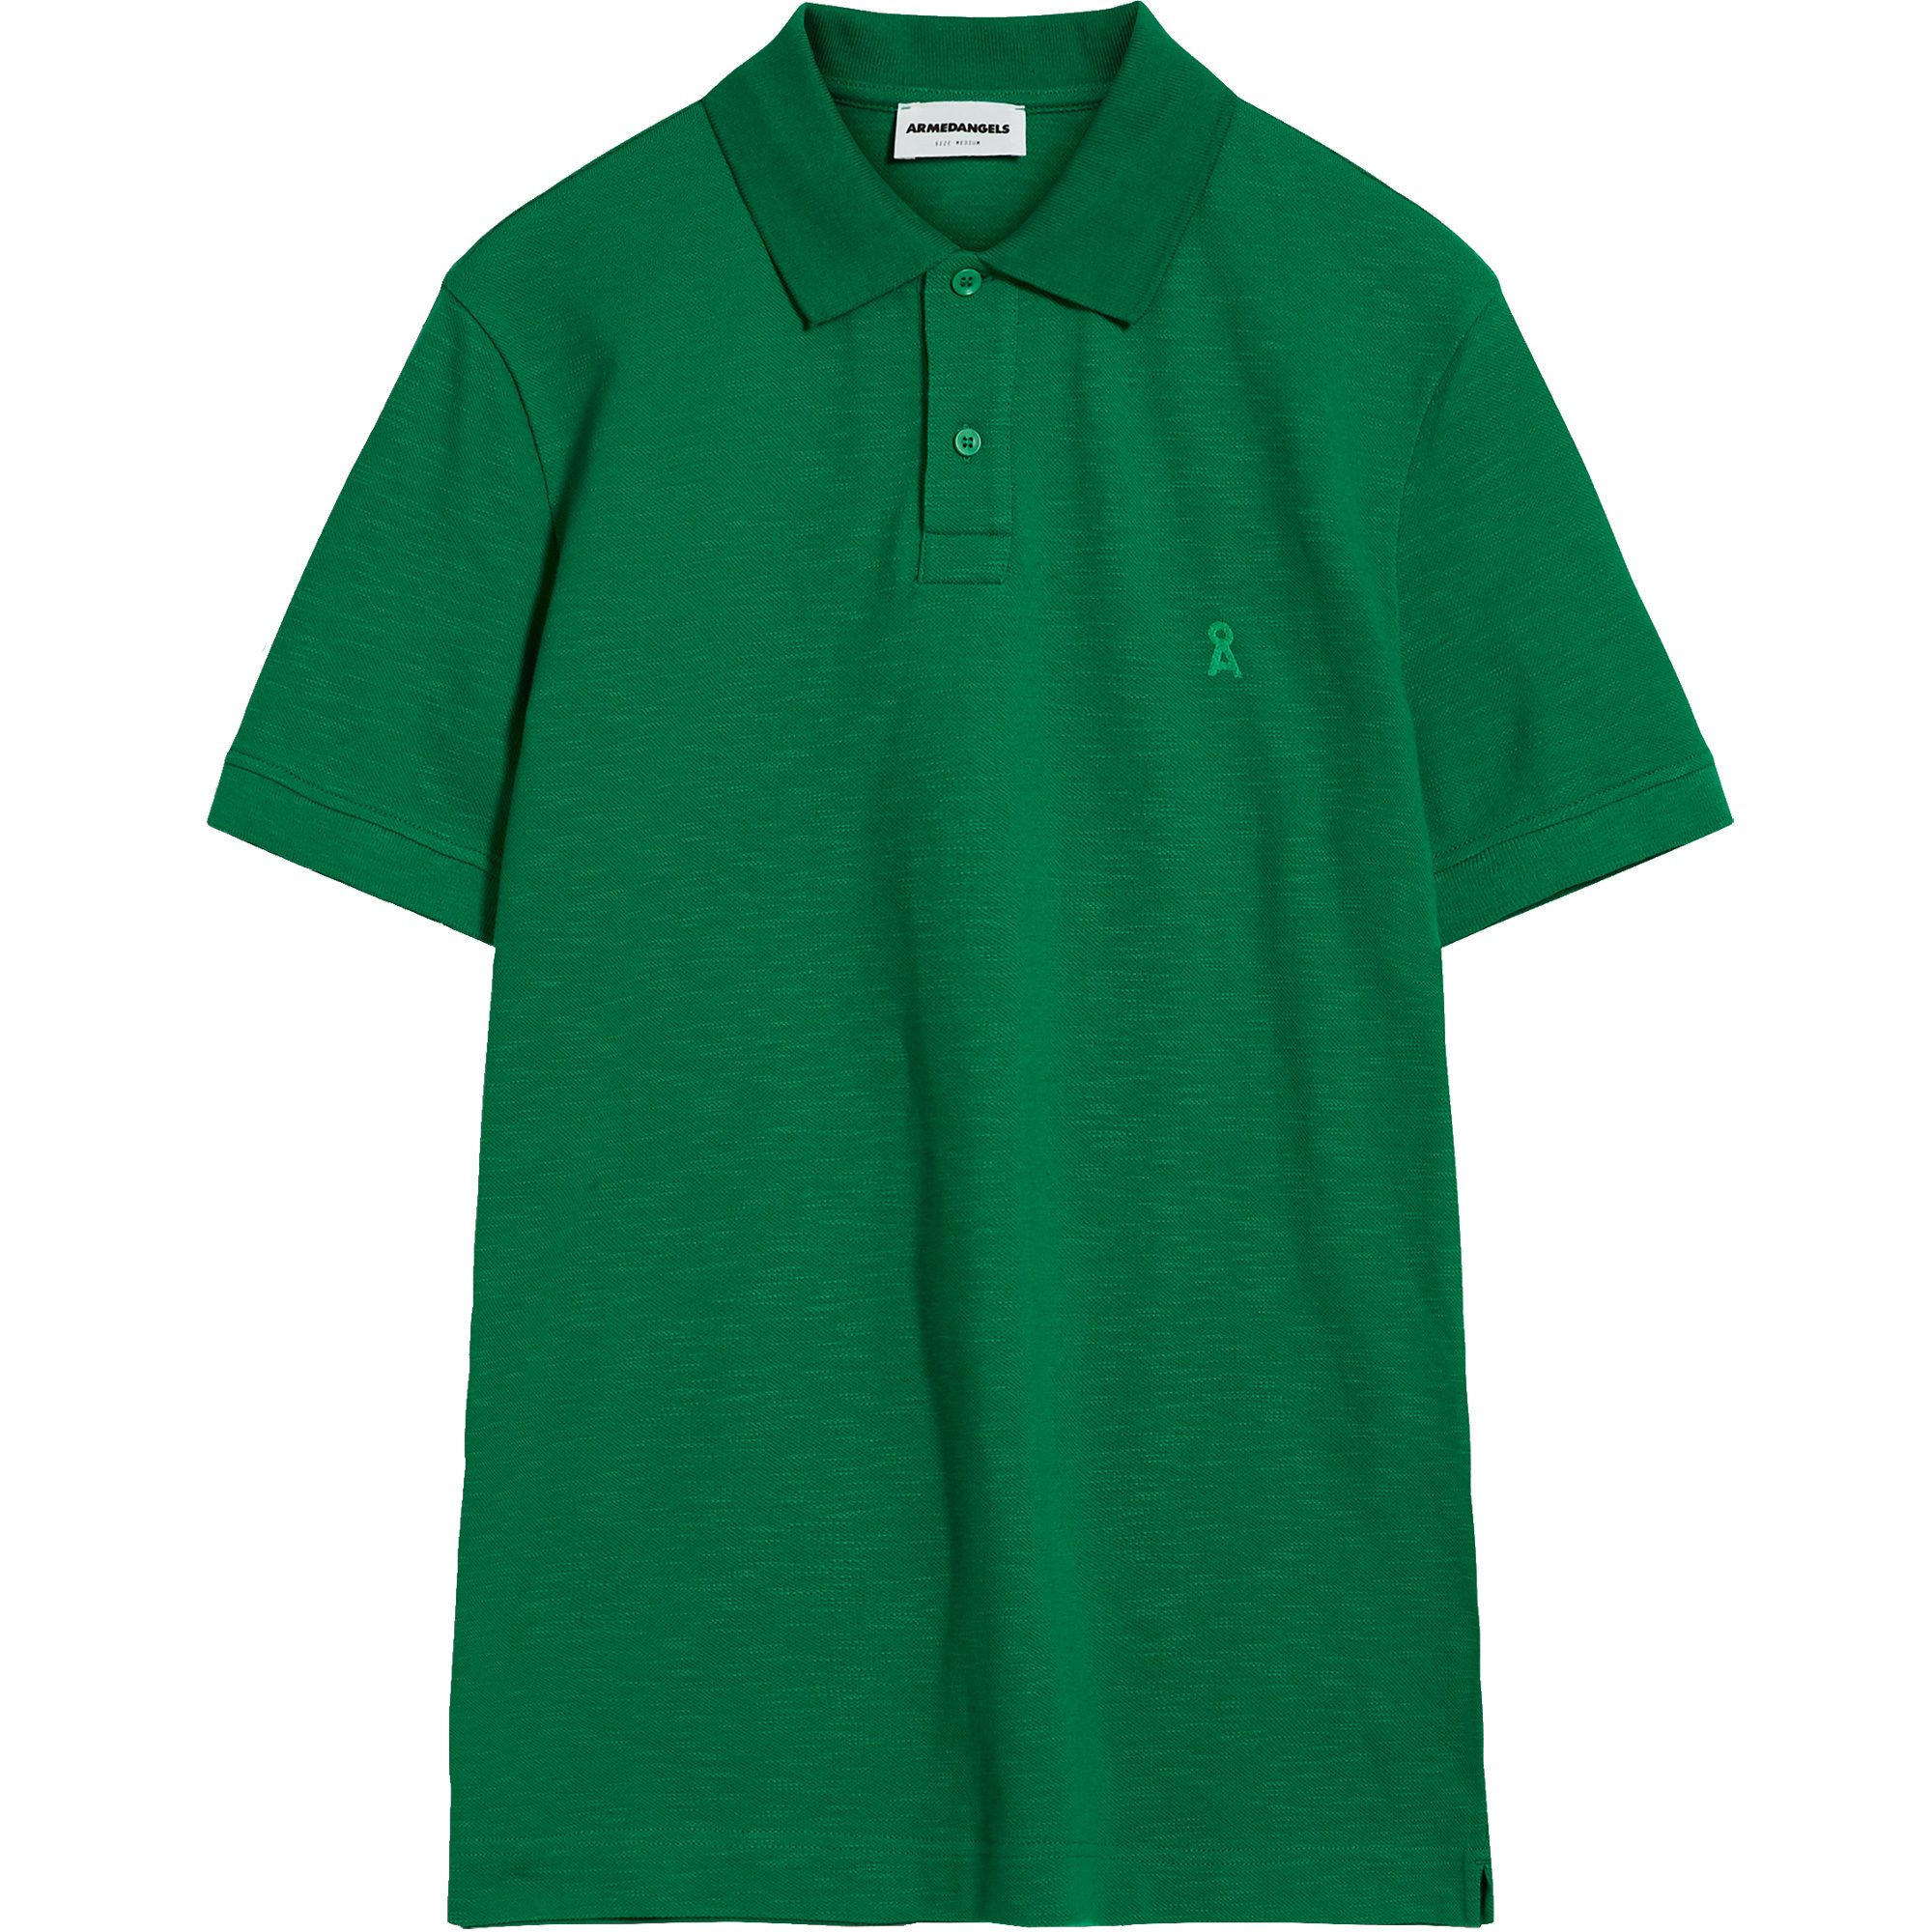 Armedangels - Fibraas Polo Shirt Herren flash green kaufen im Sport Bittl  Shop | Poloshirts